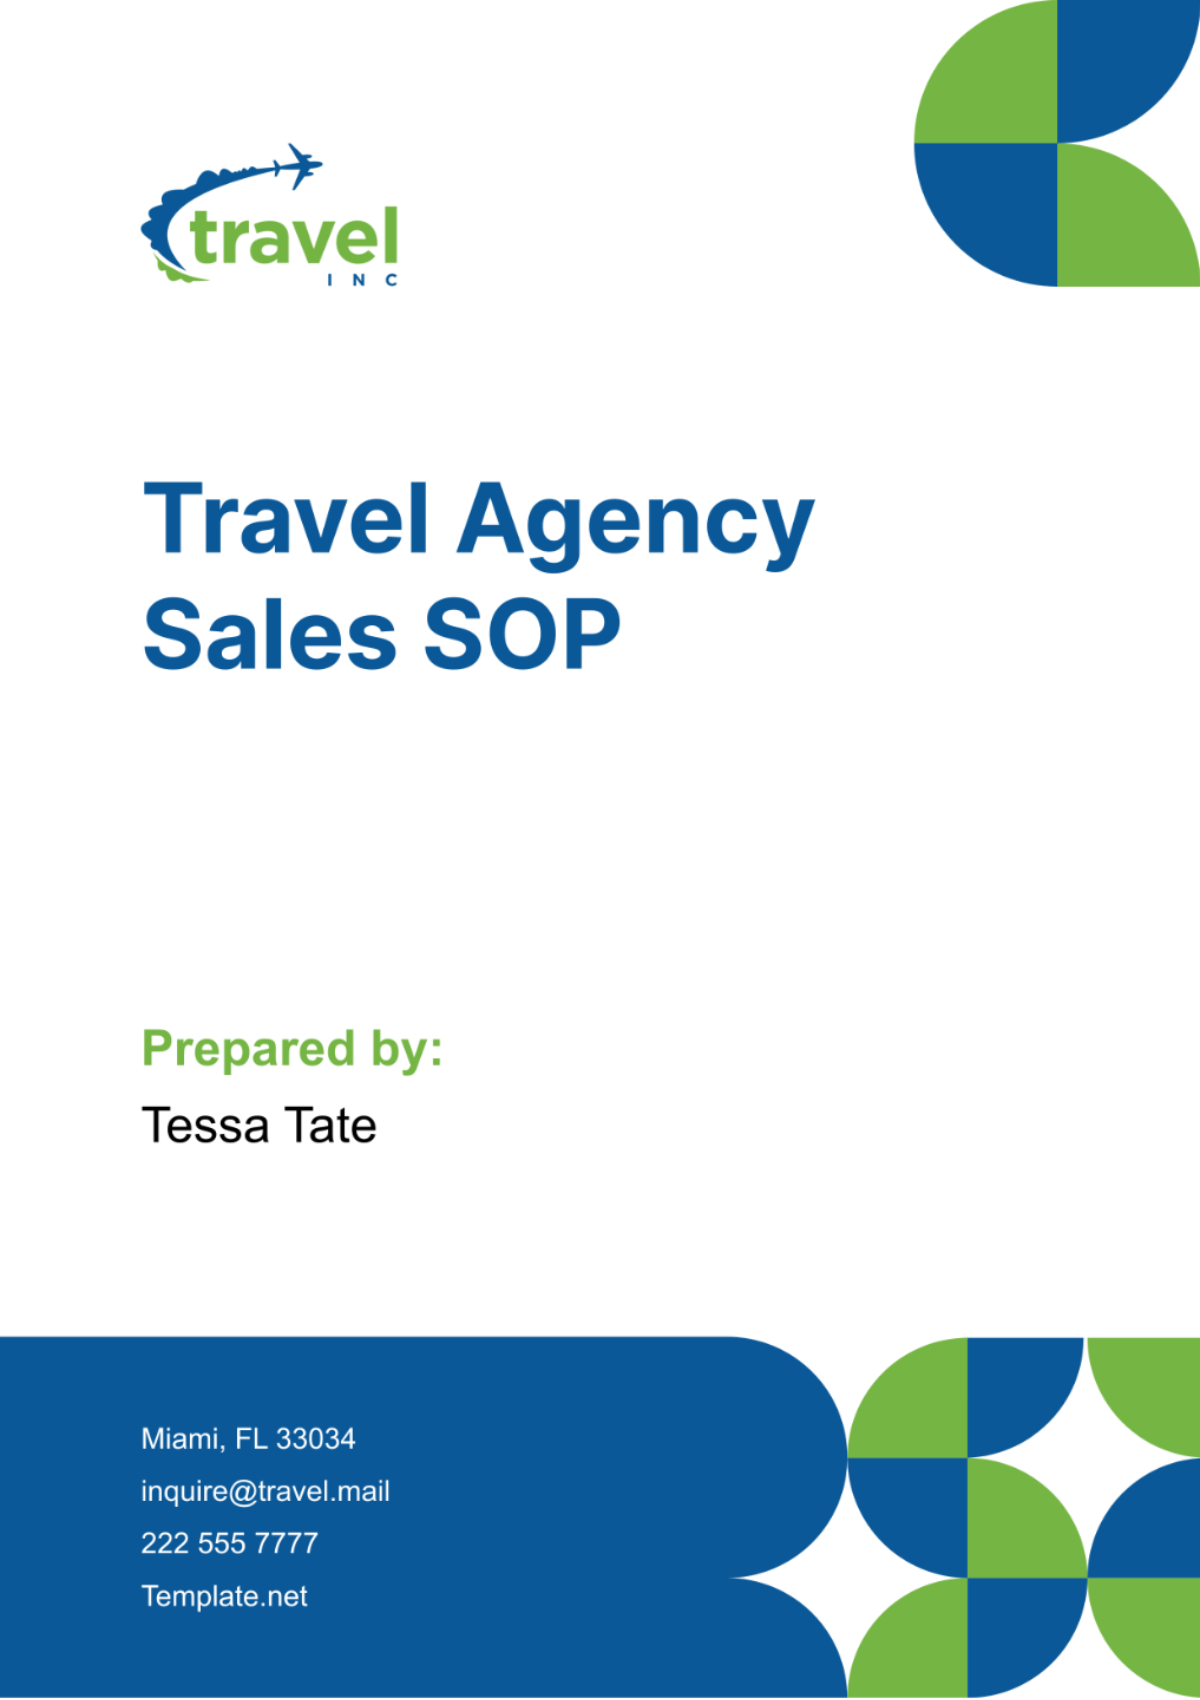 Free Travel Agency Sales SOP Template